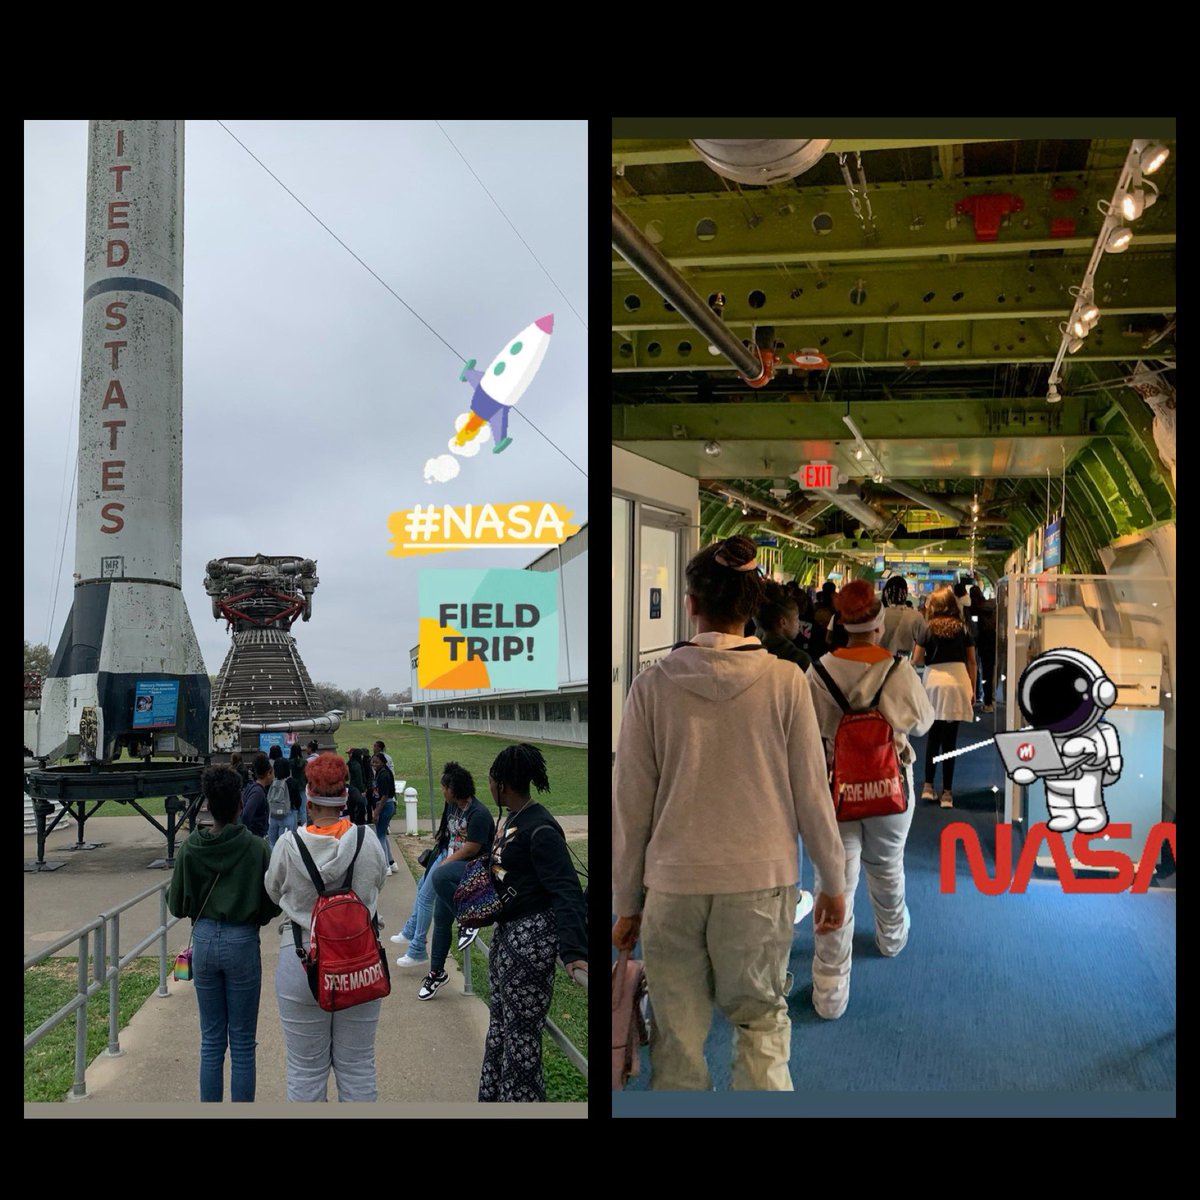 Albright Warriors @CIAAlbright enjoying their Saturday field trip to NASA! @Henderson_CIA @ChiquitaEstavan @TheExecEFFECT @AliefISD @cohmoedu @AISDSupe @TiffanyForAlief @MissPersnikety